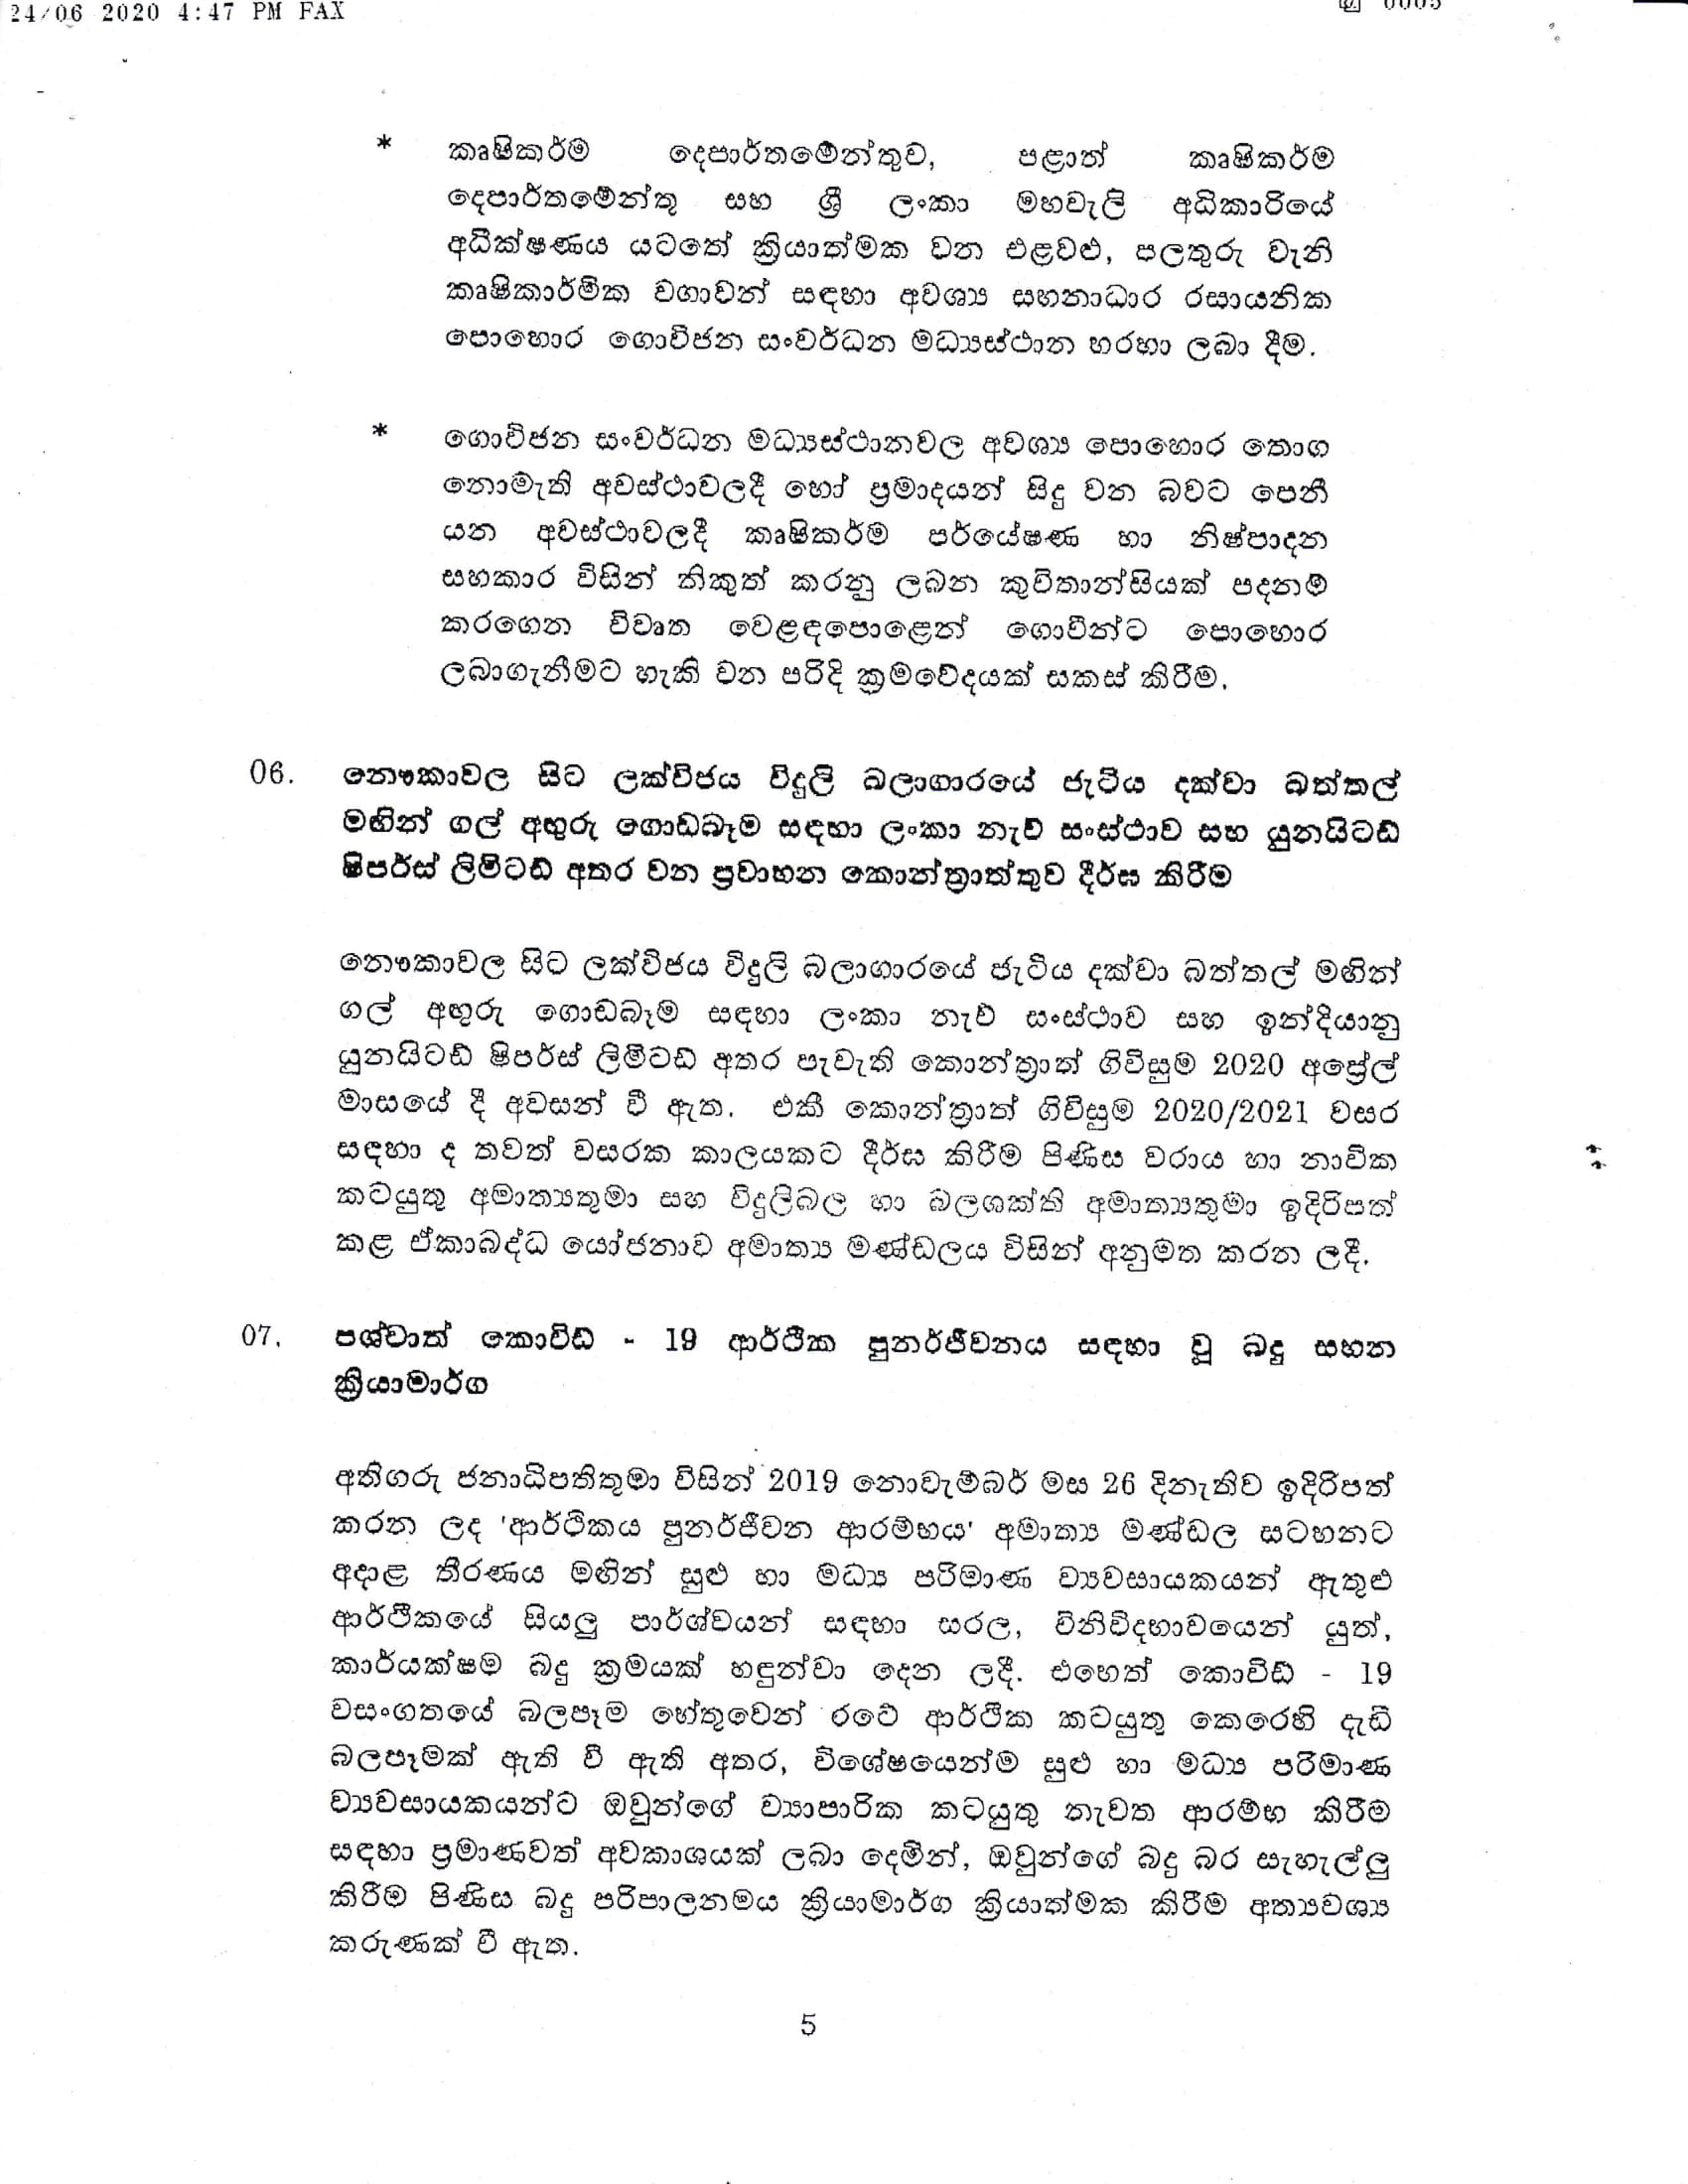 Cabinet Decision 2020 06 24 Sinhala New 5